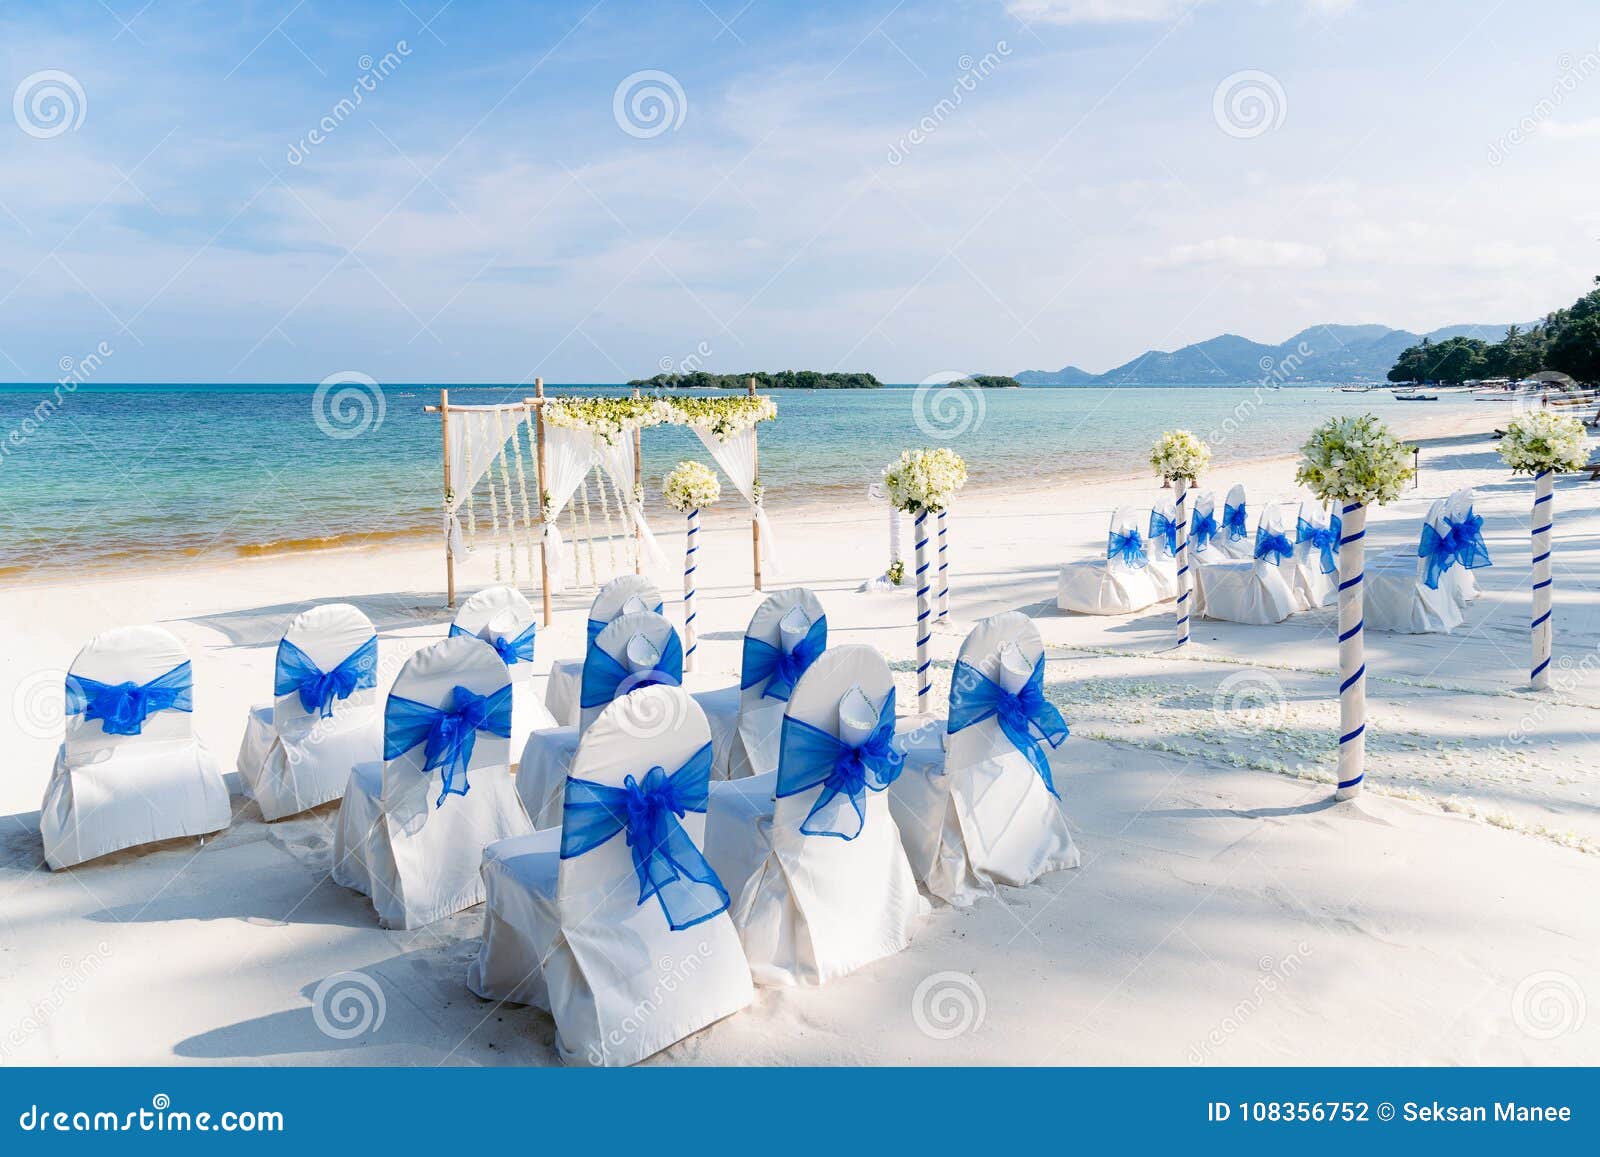 destination wedding venue on the beach, samui island, thailand